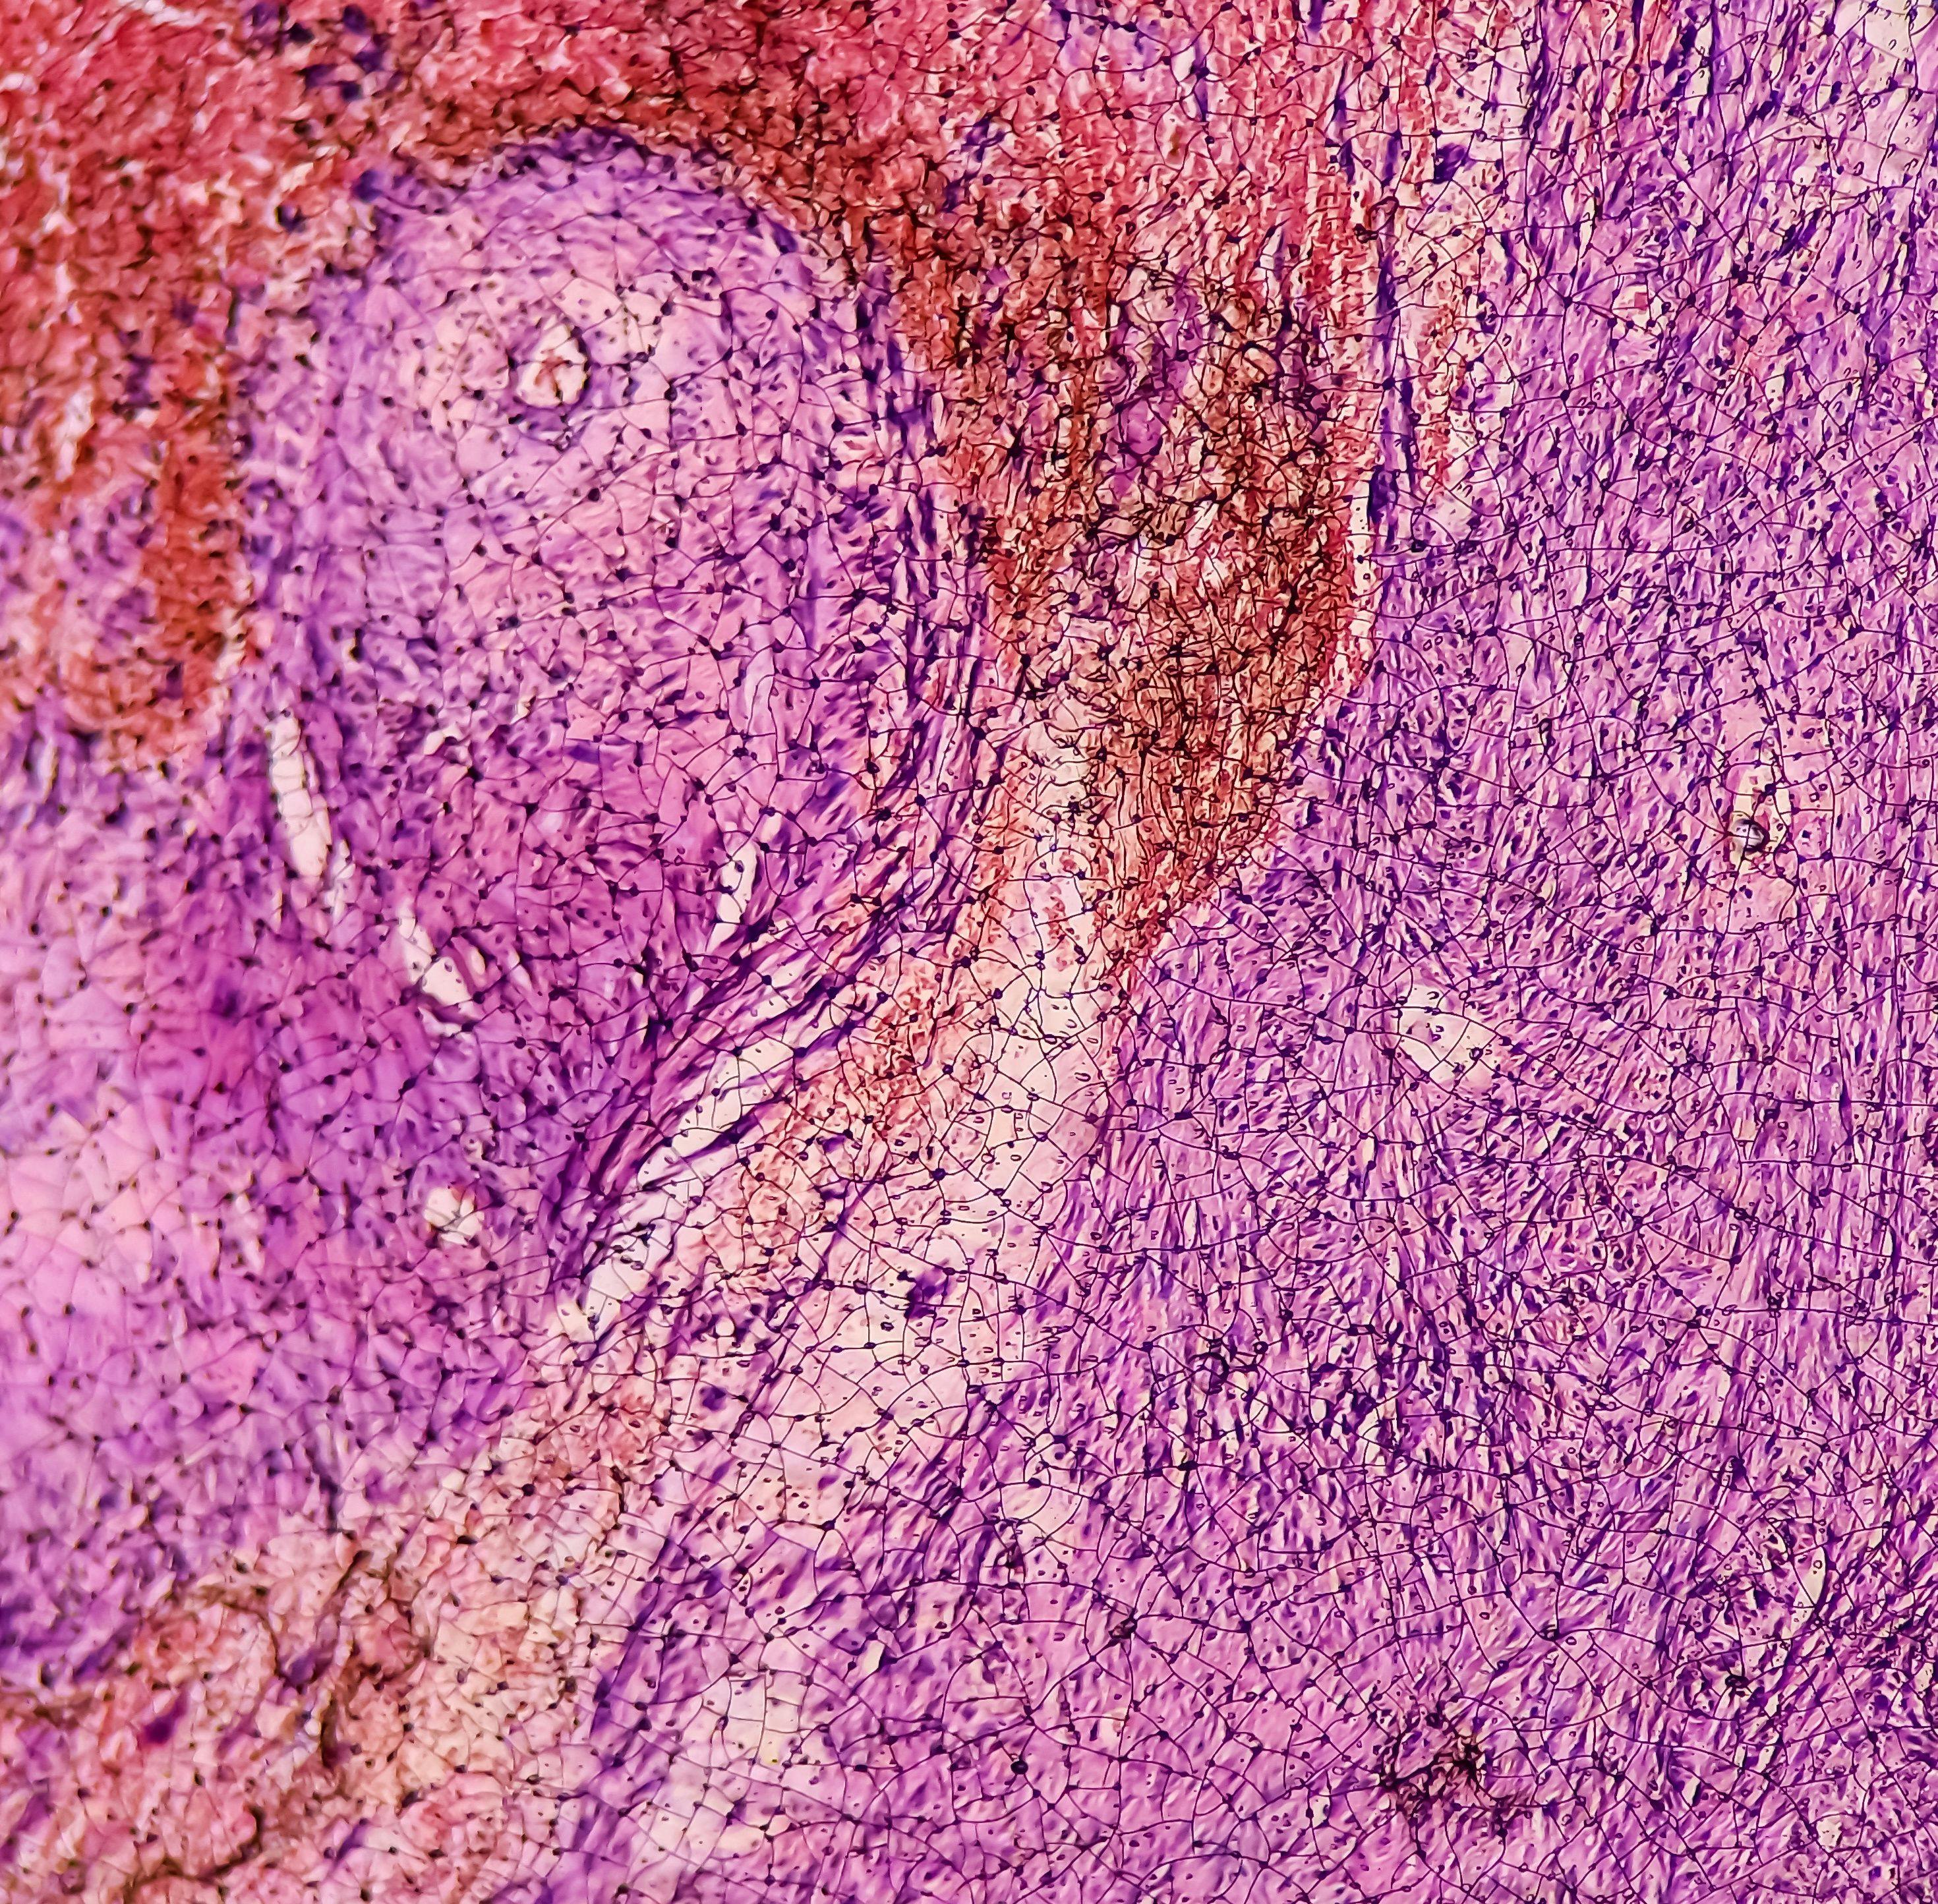 Small intestine mass(biopsy): Malignant gastrointestinal stromal tumor(GIST), Malignant peripheral nerve sheath tumor(MPNST), rare malignant mesenchymal lesion. Neurogenic sarcoma. | Image Credit: © MdBabul -www.stock.adobe.com